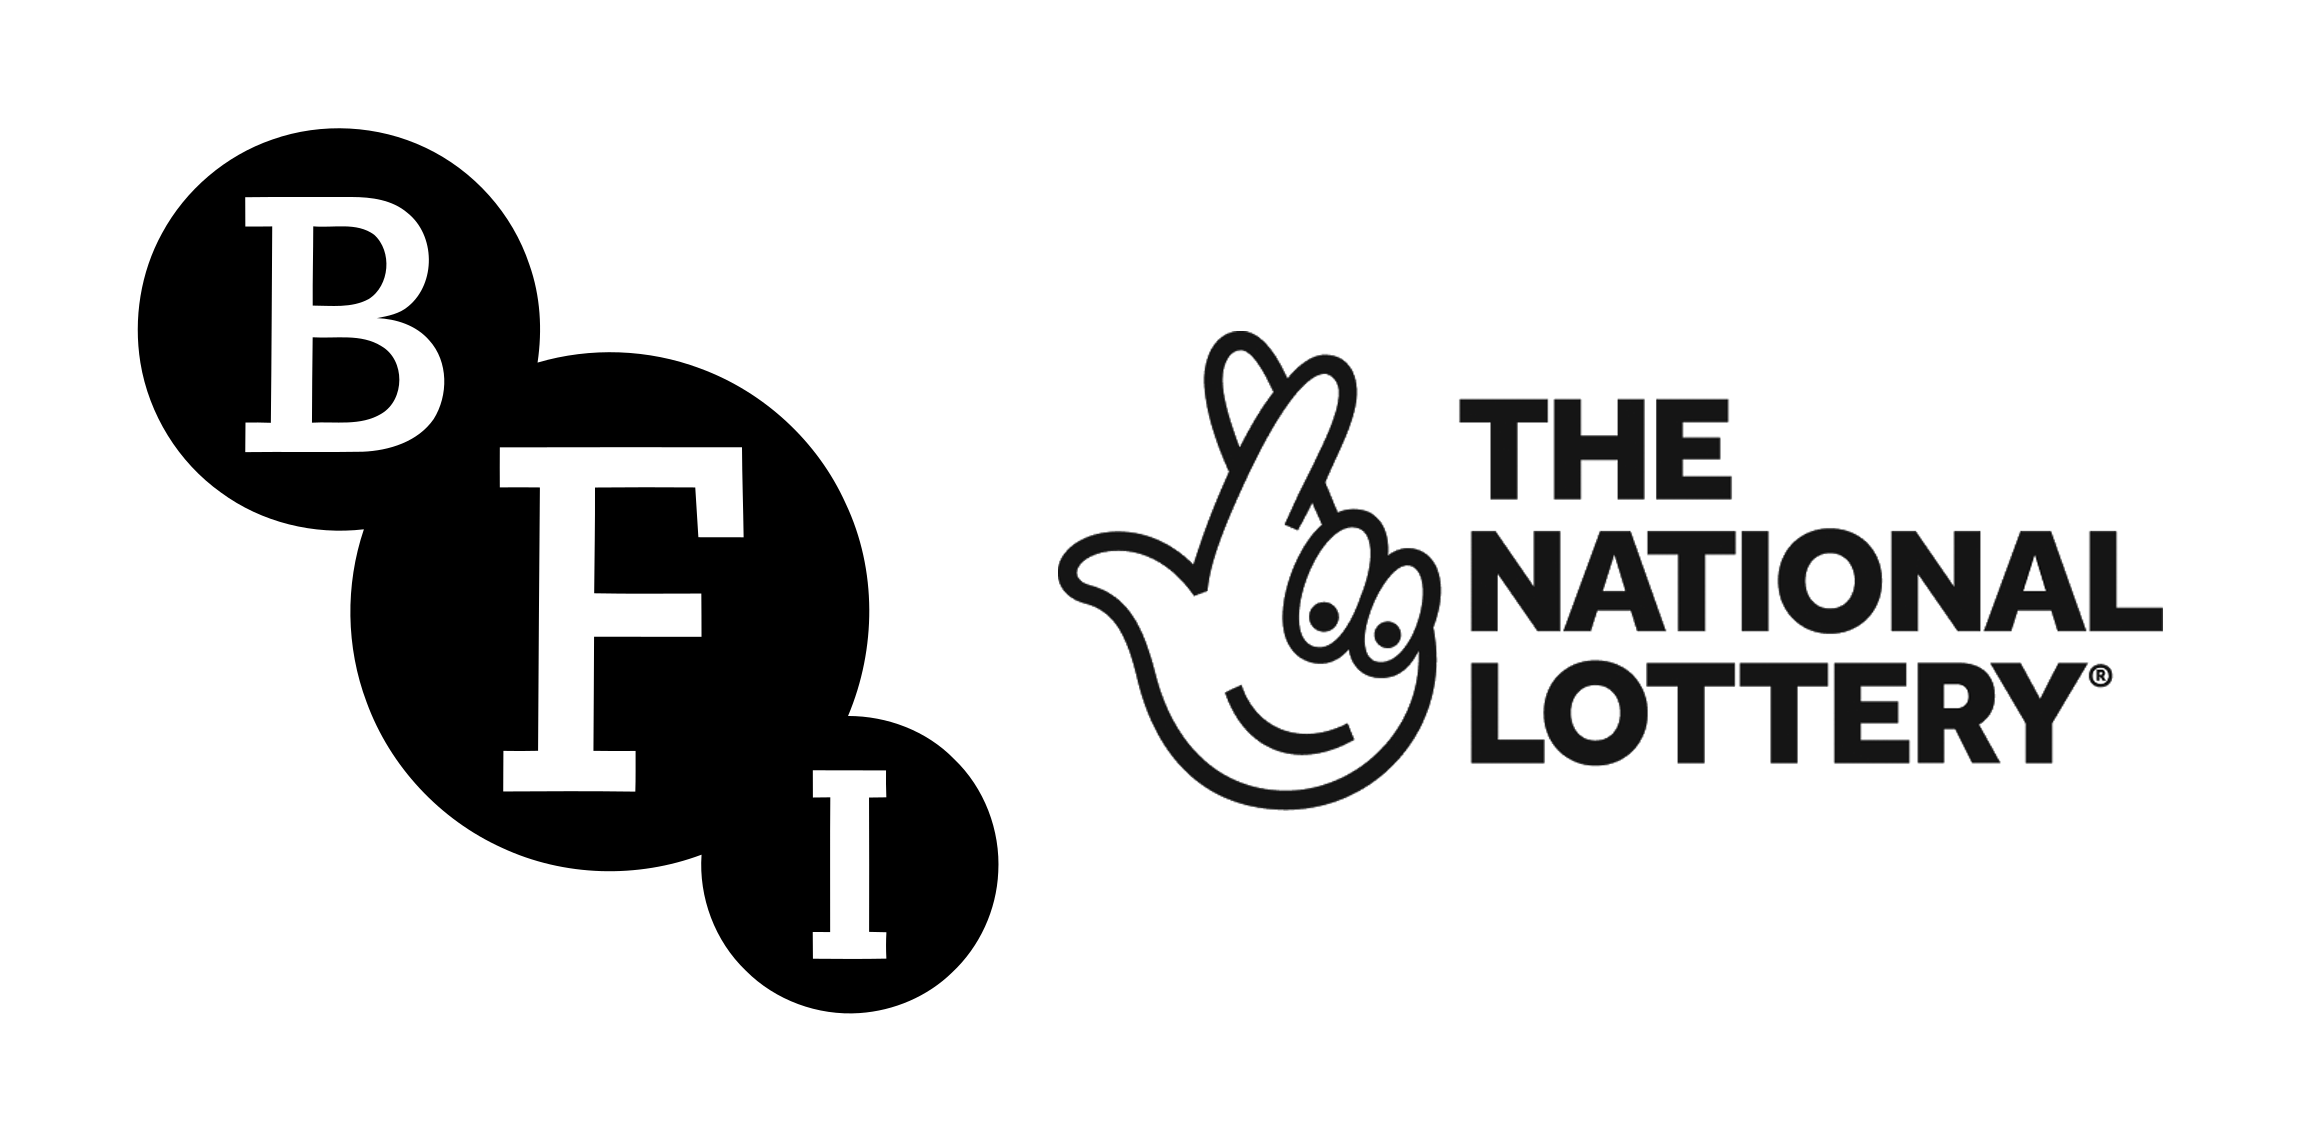 BFI Creative Challenge Fund via National Lottery